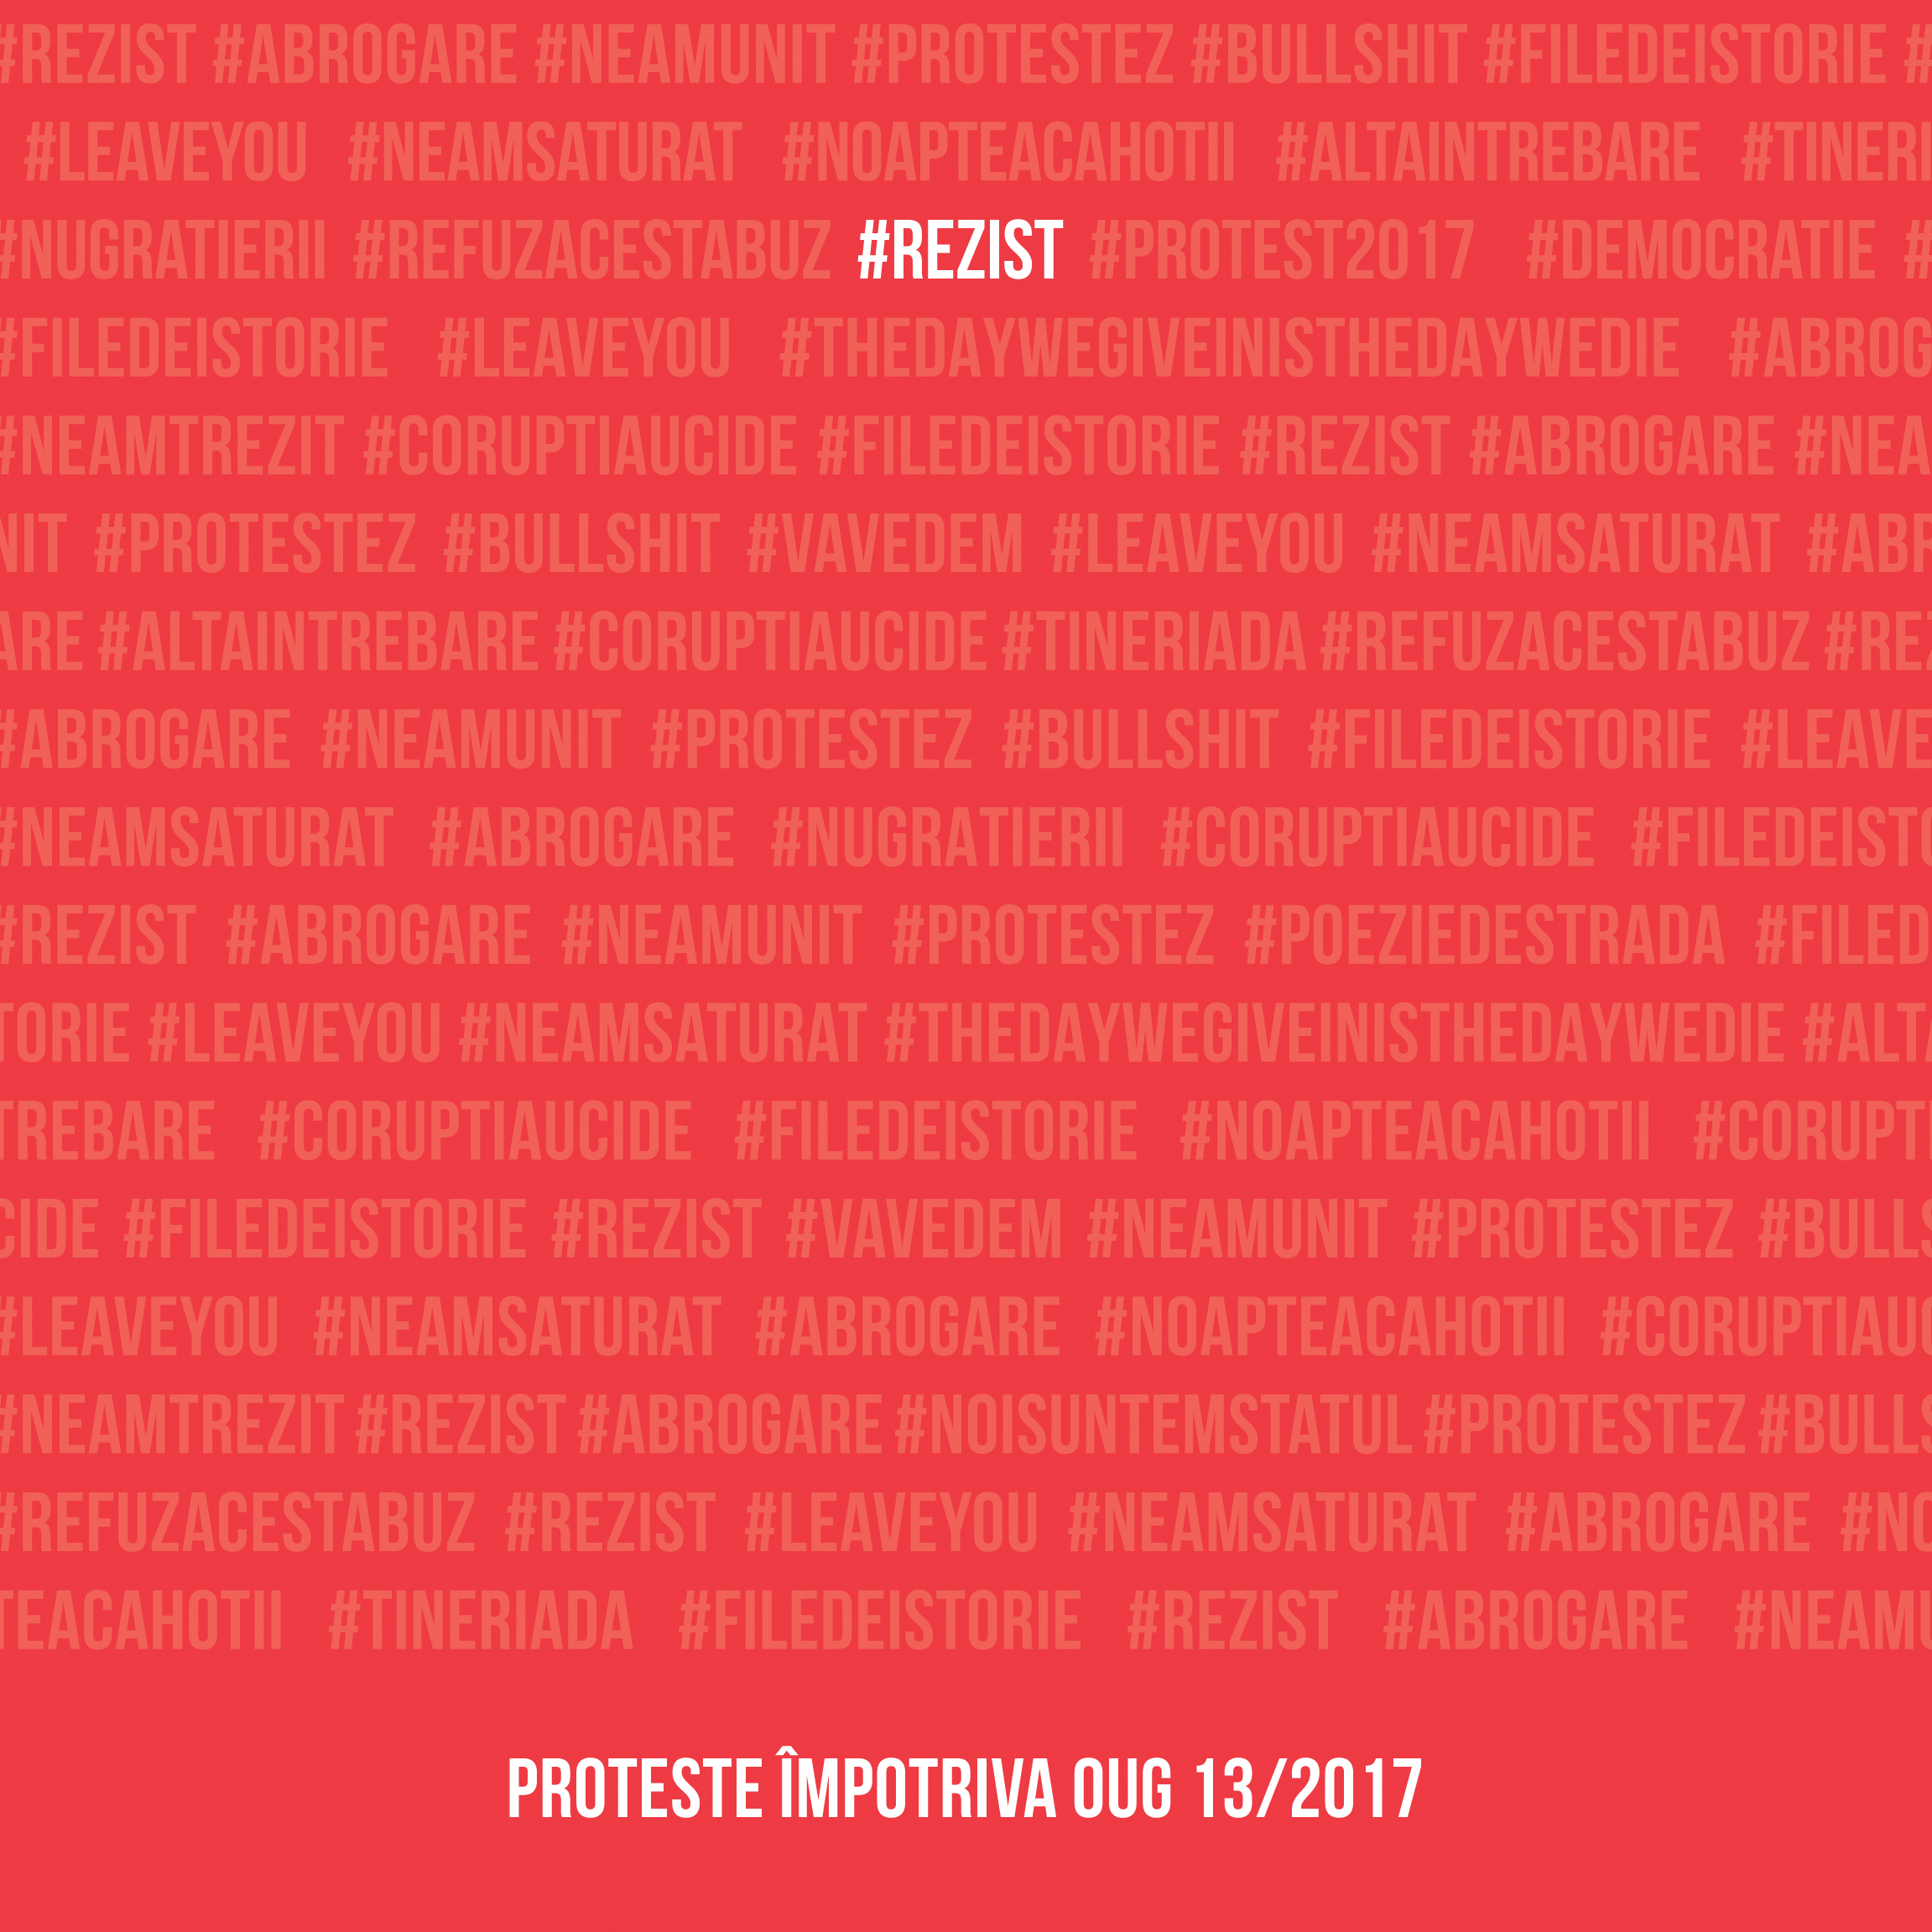 oug 79/2017 norme de aplicare #rezist. proteste impotriva OUG 13/2017